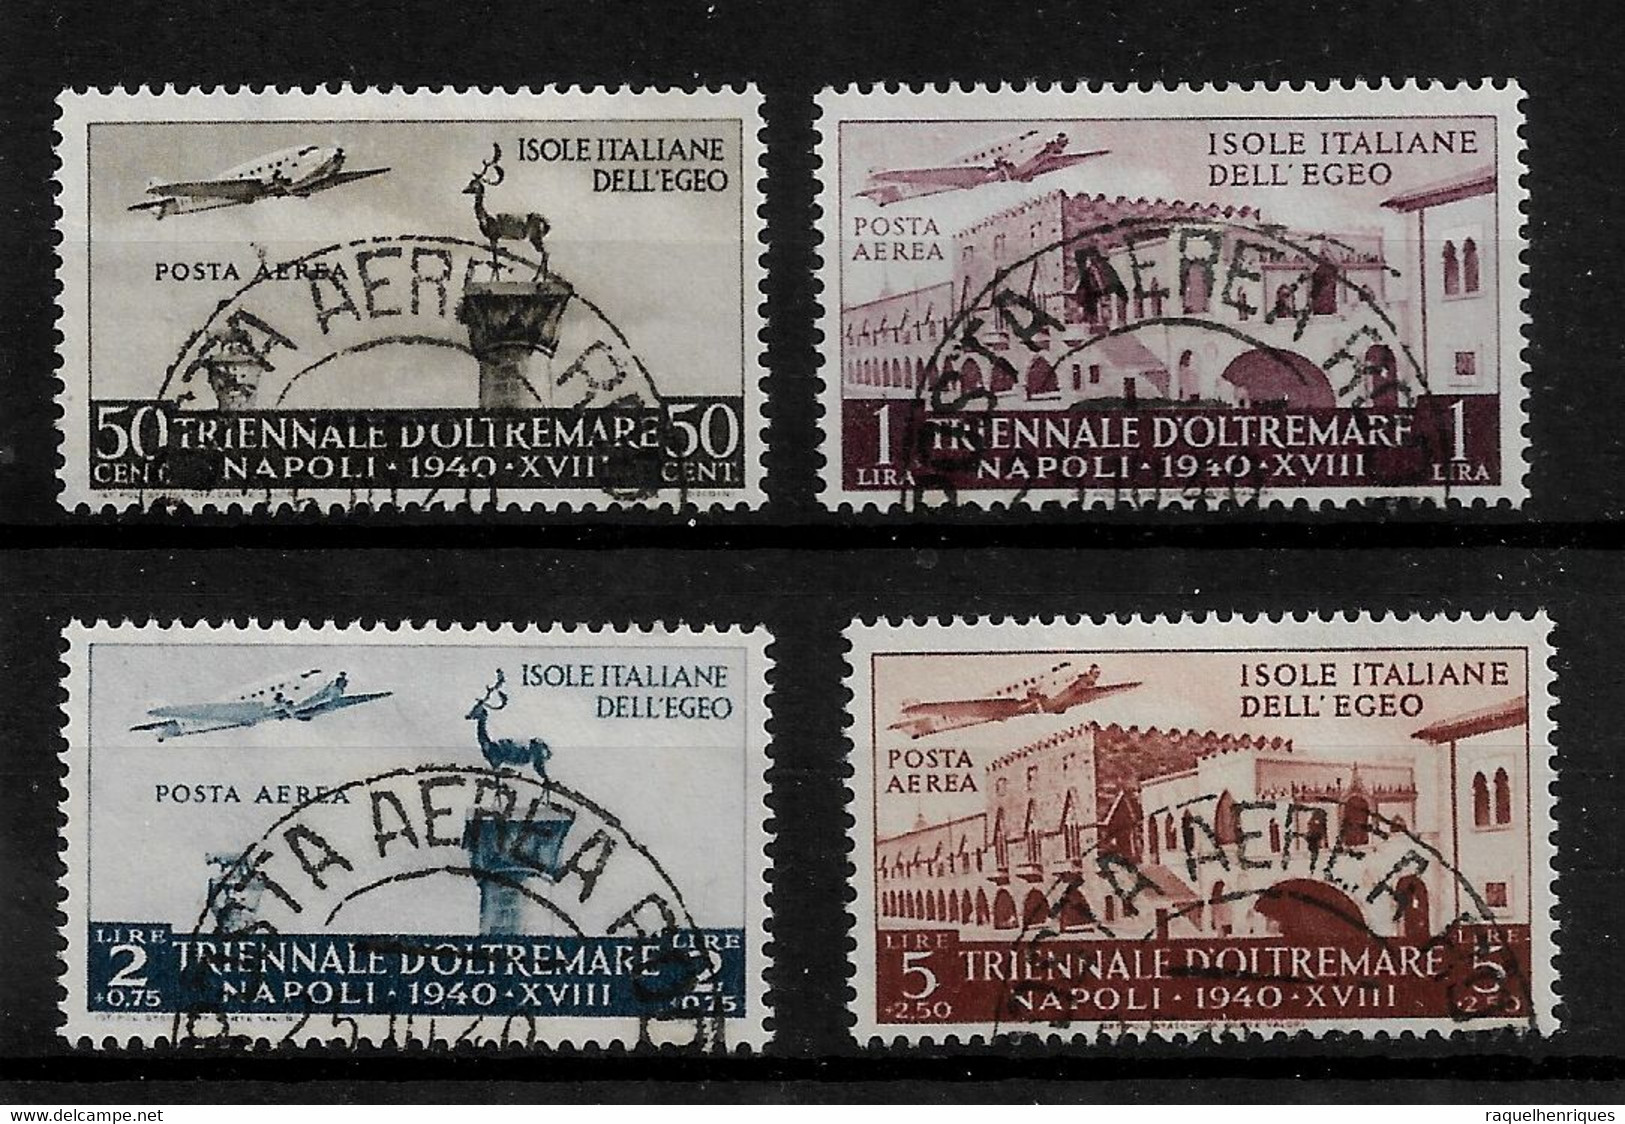 ITALY STAMP - AEGEAN ISLANDS - 1940 Airmail - Exhibition In Napoli SET USED (BA5#88) - Egeo (Amministrazione Autonoma)